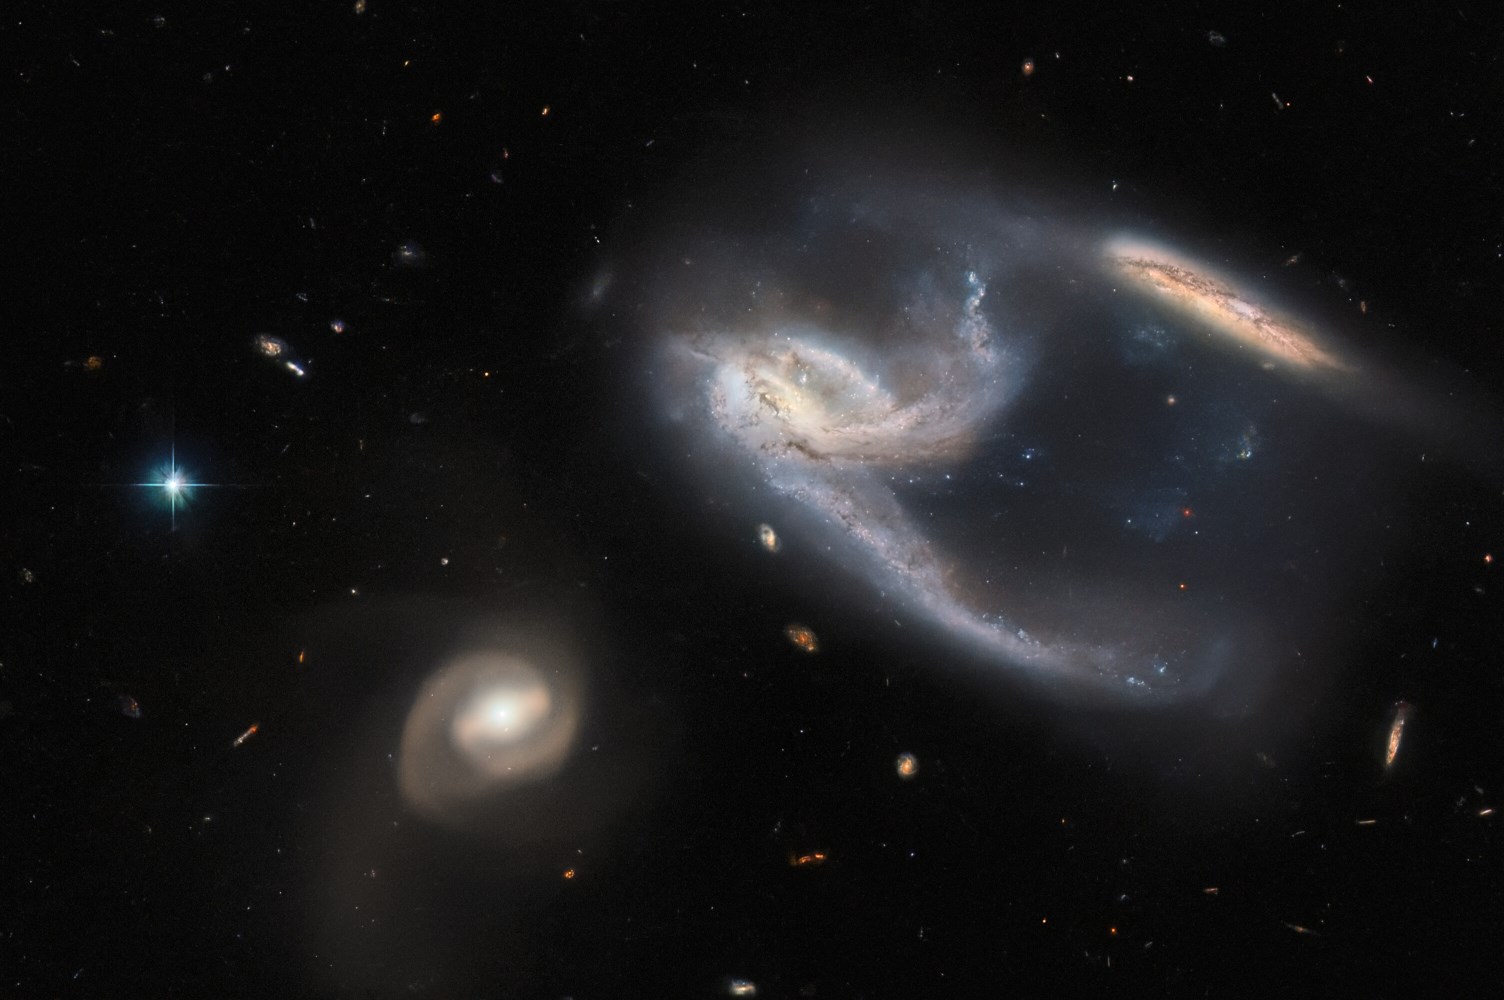 Skupina od tri galaksije, poznata kao NGC 7764A. Izvor: ESA/Hubble & NASA, J. Dalcanton, Dark Energy Survey, U.S. Department of Energy (DOE), Fermilab (FNAL), Dark Energy Survey Camera (DECam), Cerro Tololo Inter-American Observatory (CTIO), NoirLab/National Science Foundation/AURA, European Southern Observatory (ESO); Acknowledgment: J. Schmidt.